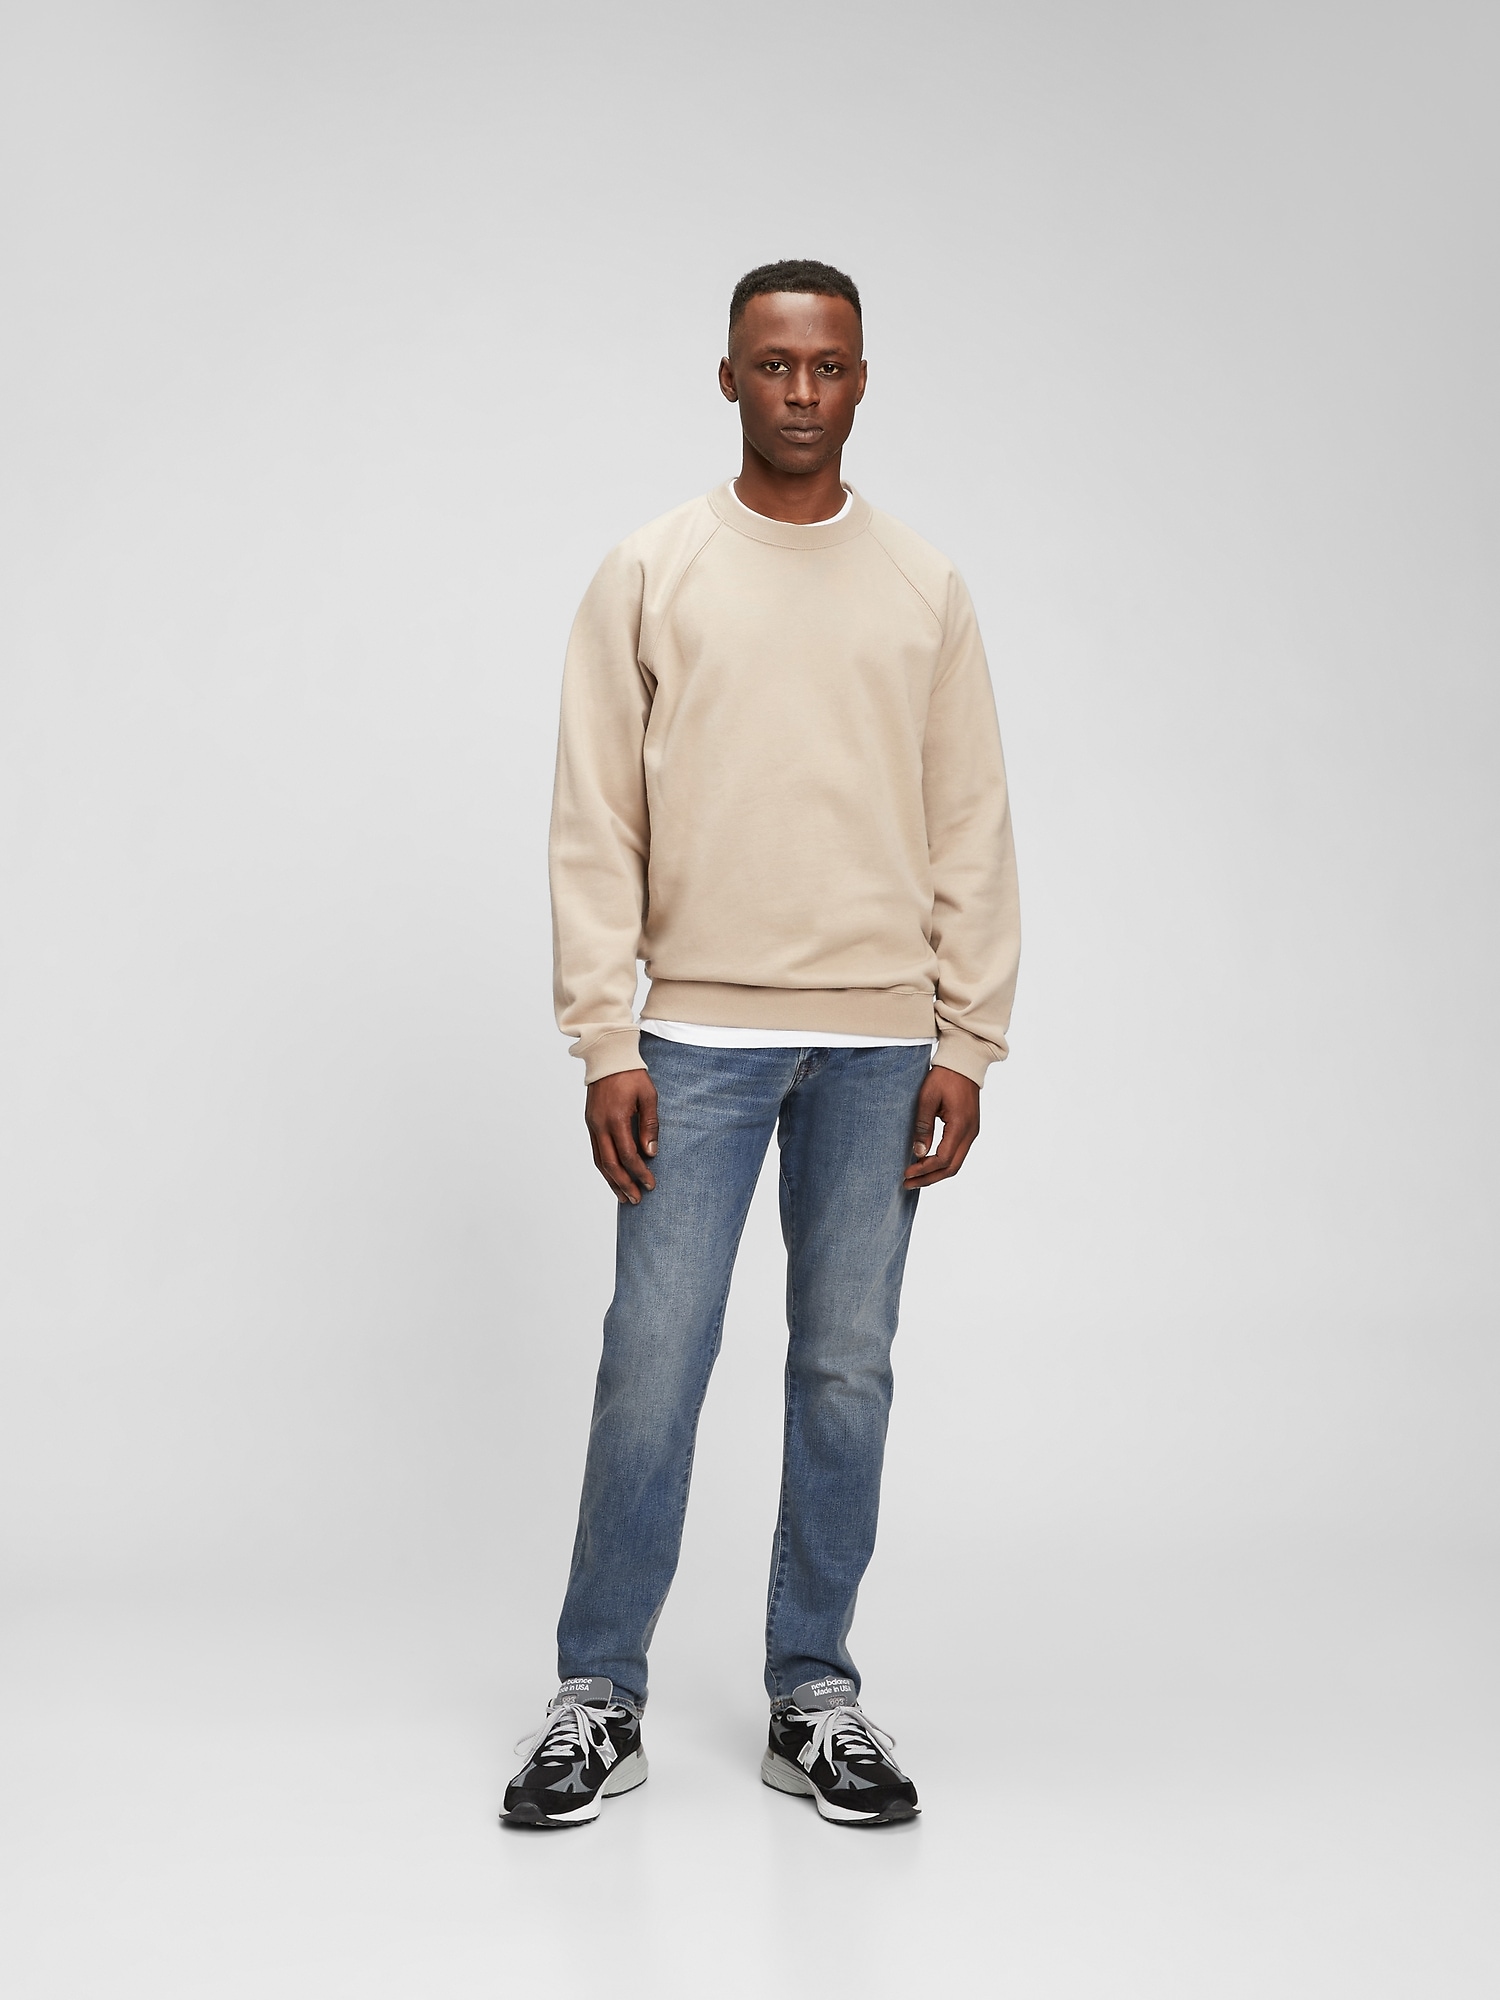 Gap Soft Wear Slim Jeans With Gapflex - ShopStyle